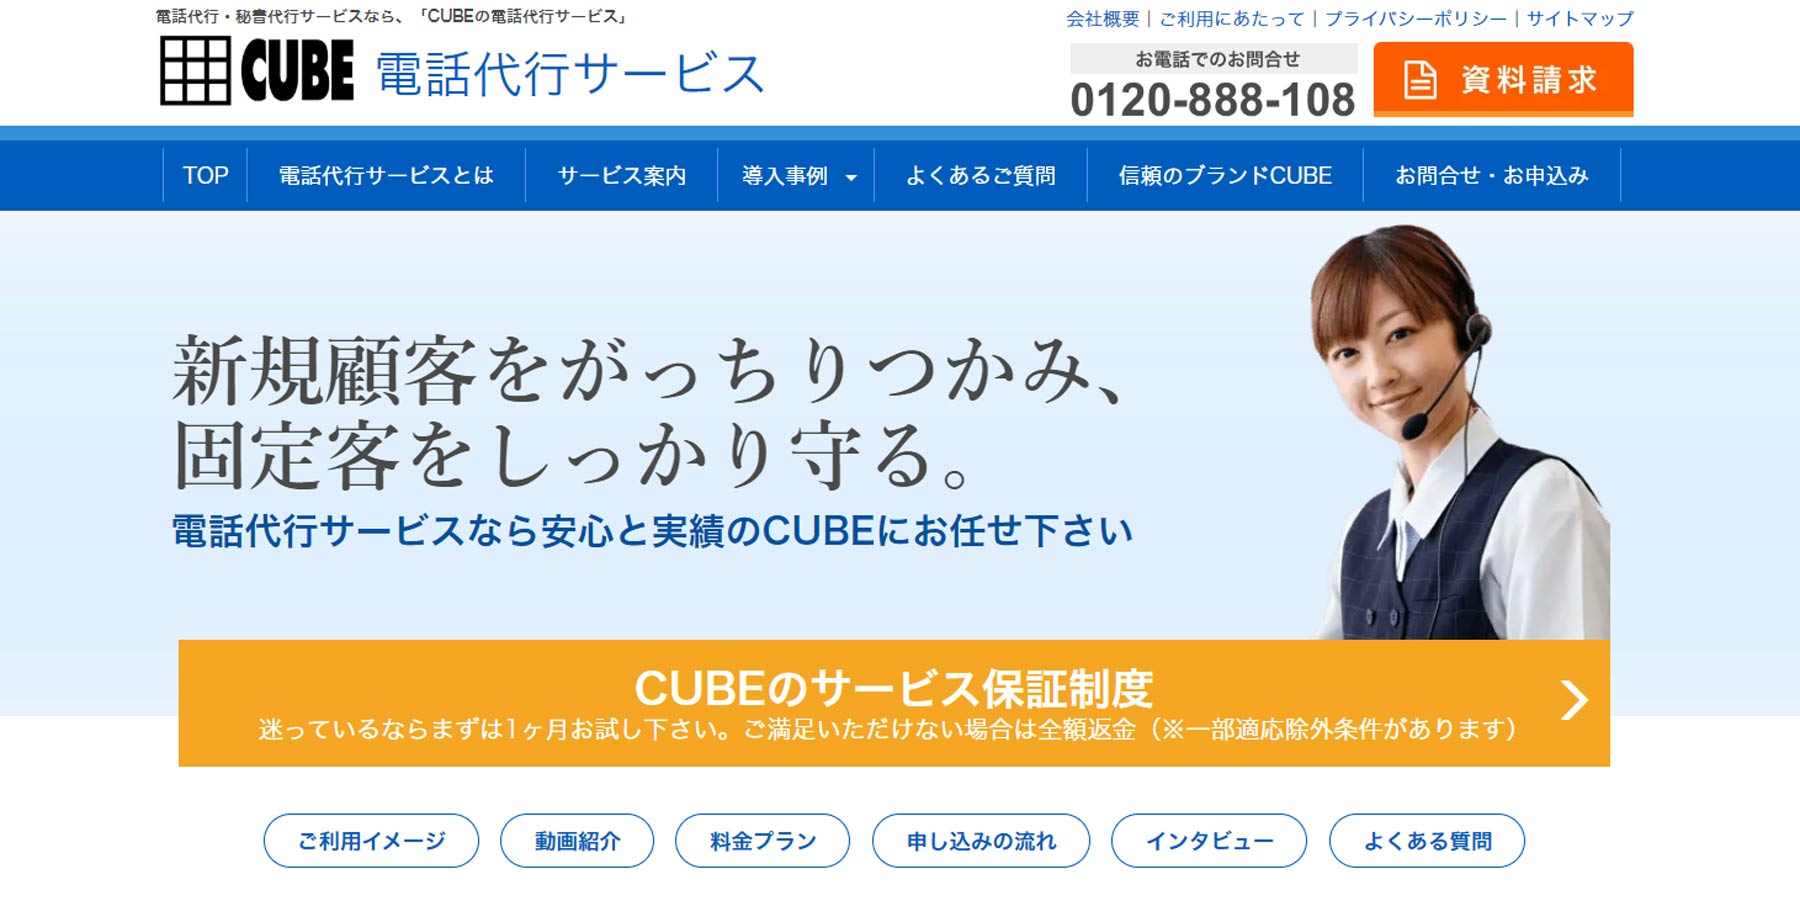 CUBE電話代行サービス公式Webサイト